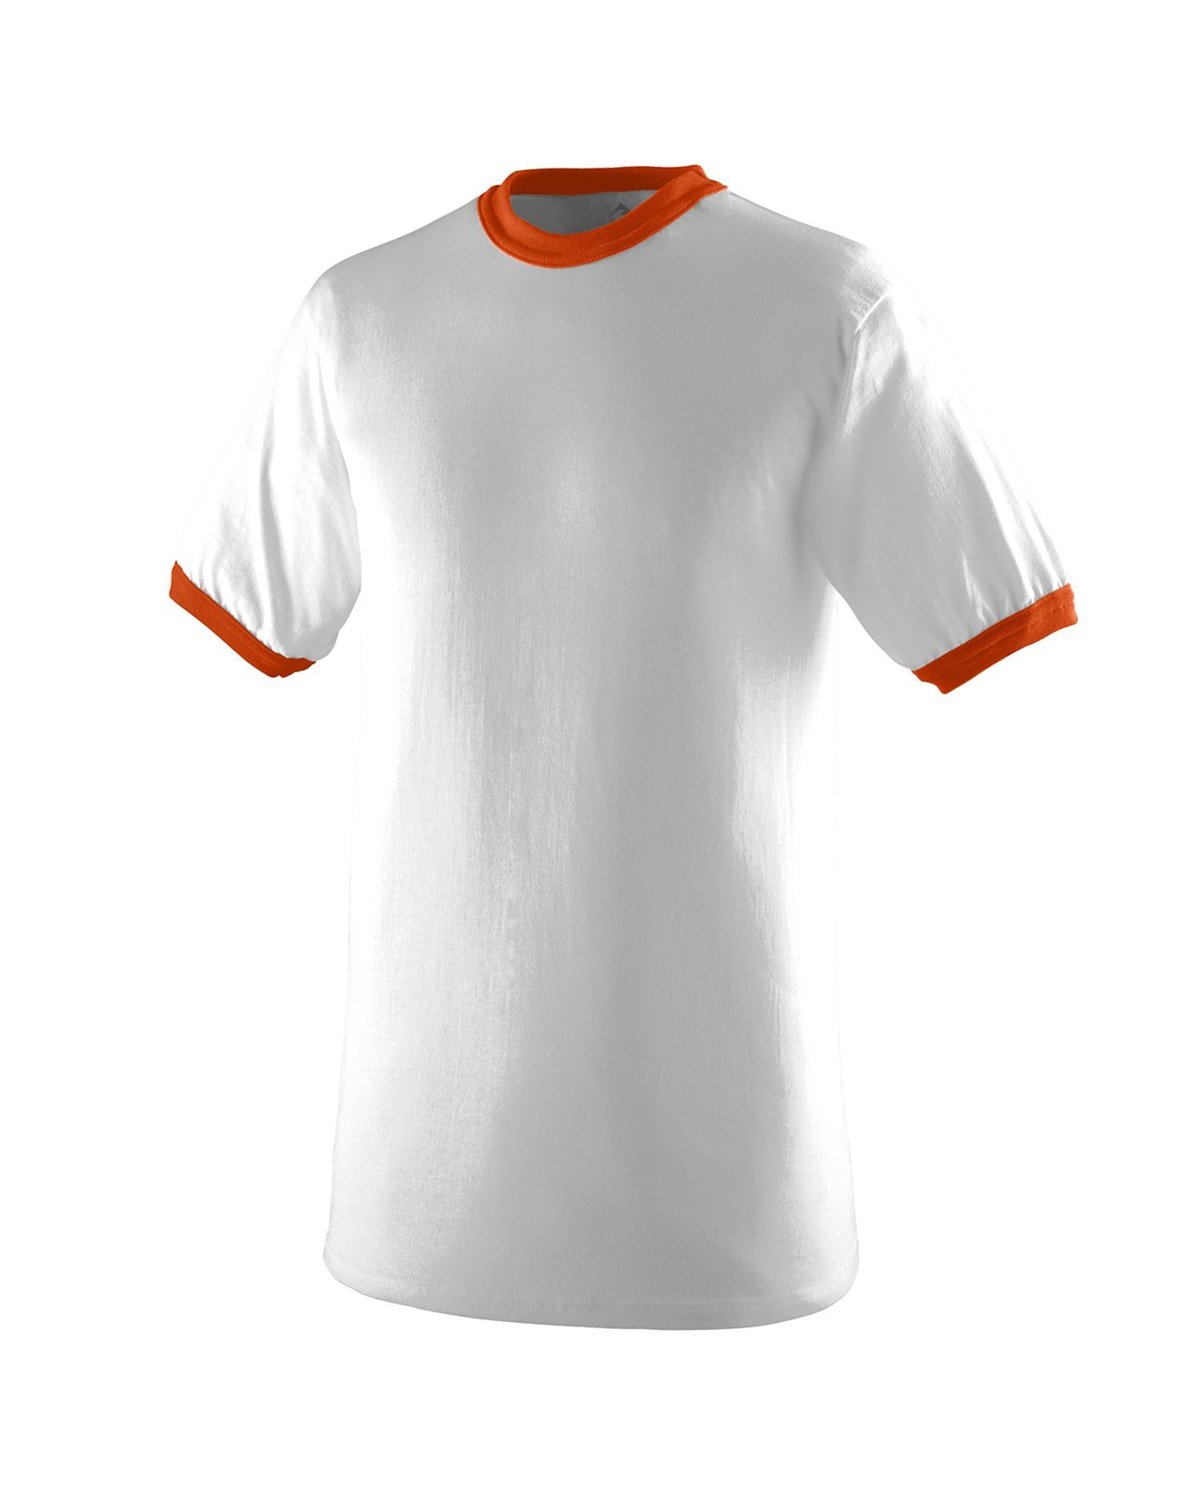 Augusta Sportswear 710 - 50/50 Ringer T-Shirt